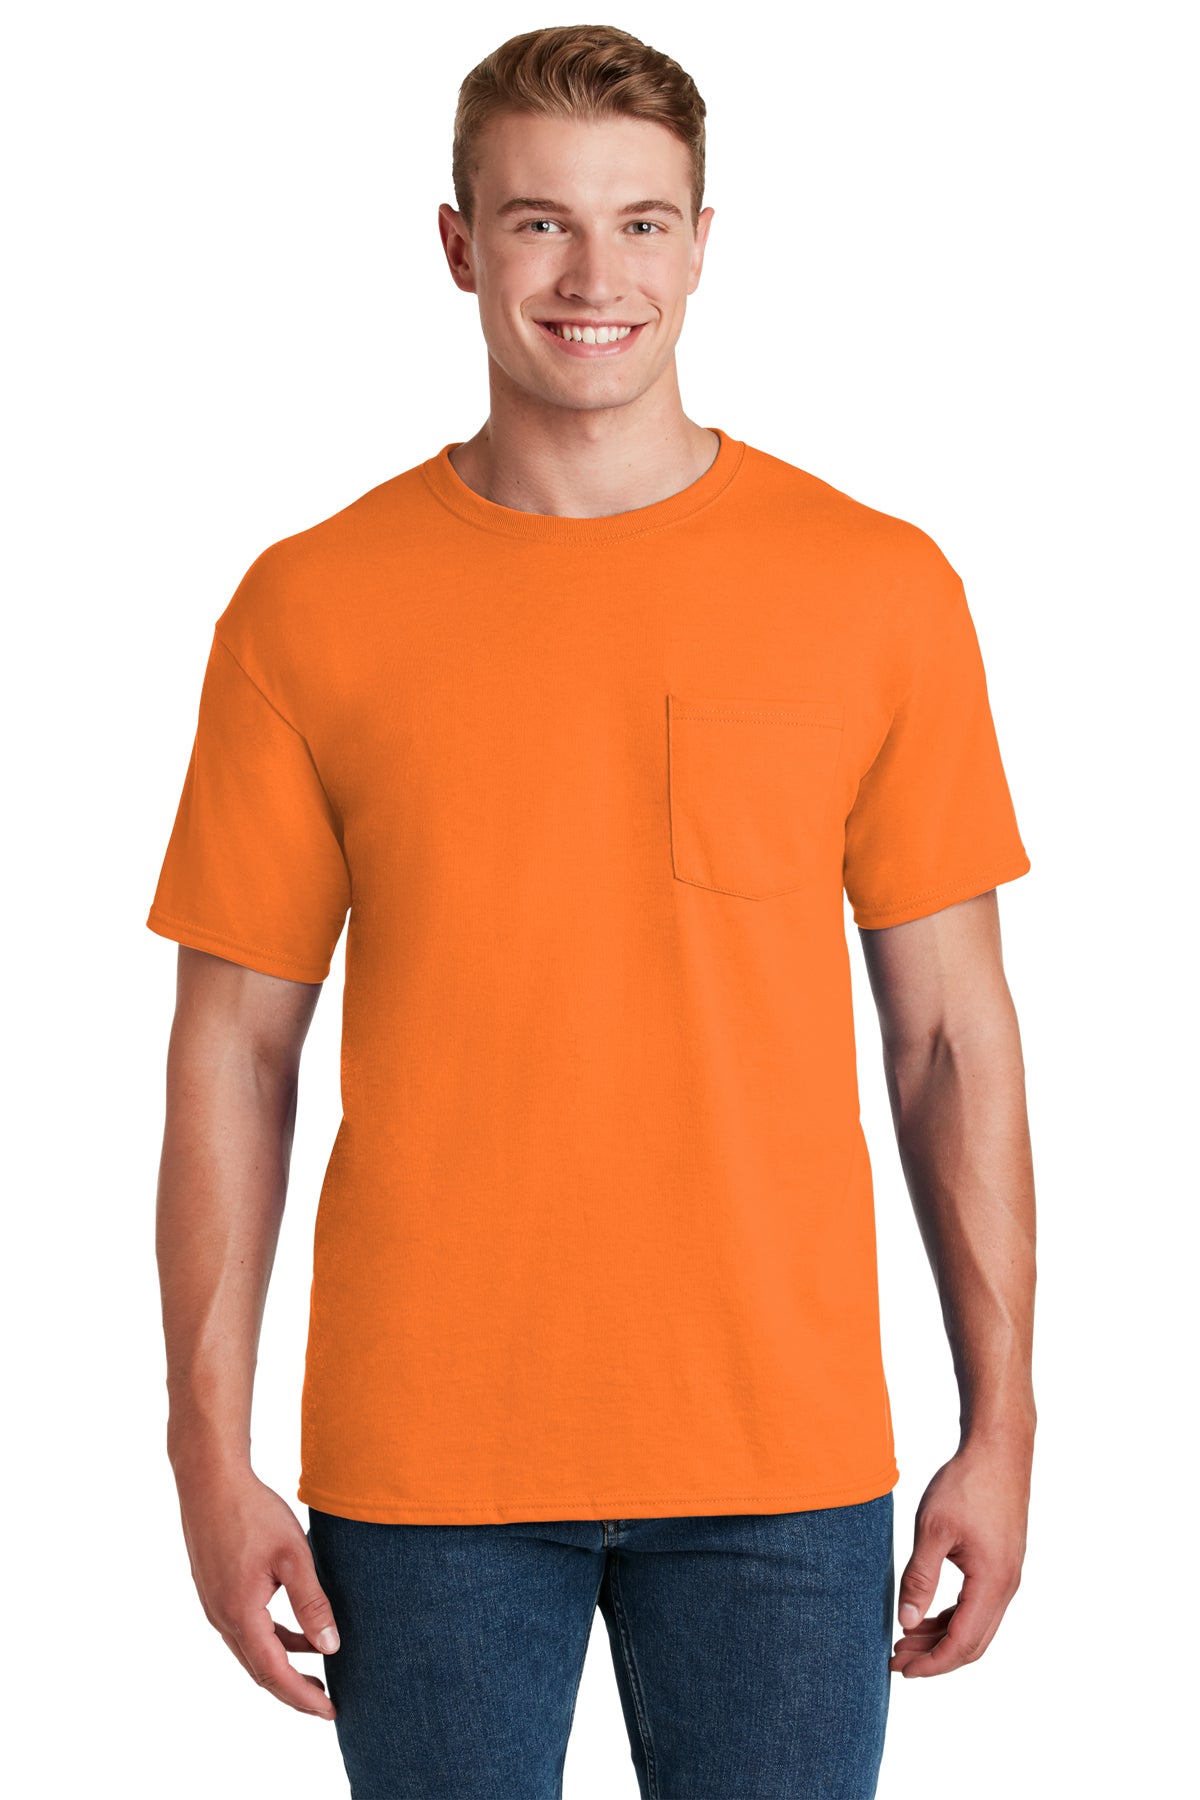 USA - Emblem – Fann T-Shirt. JERZEES® 29MP Pocket Cotton/Poly 50/50 Dri-Power®